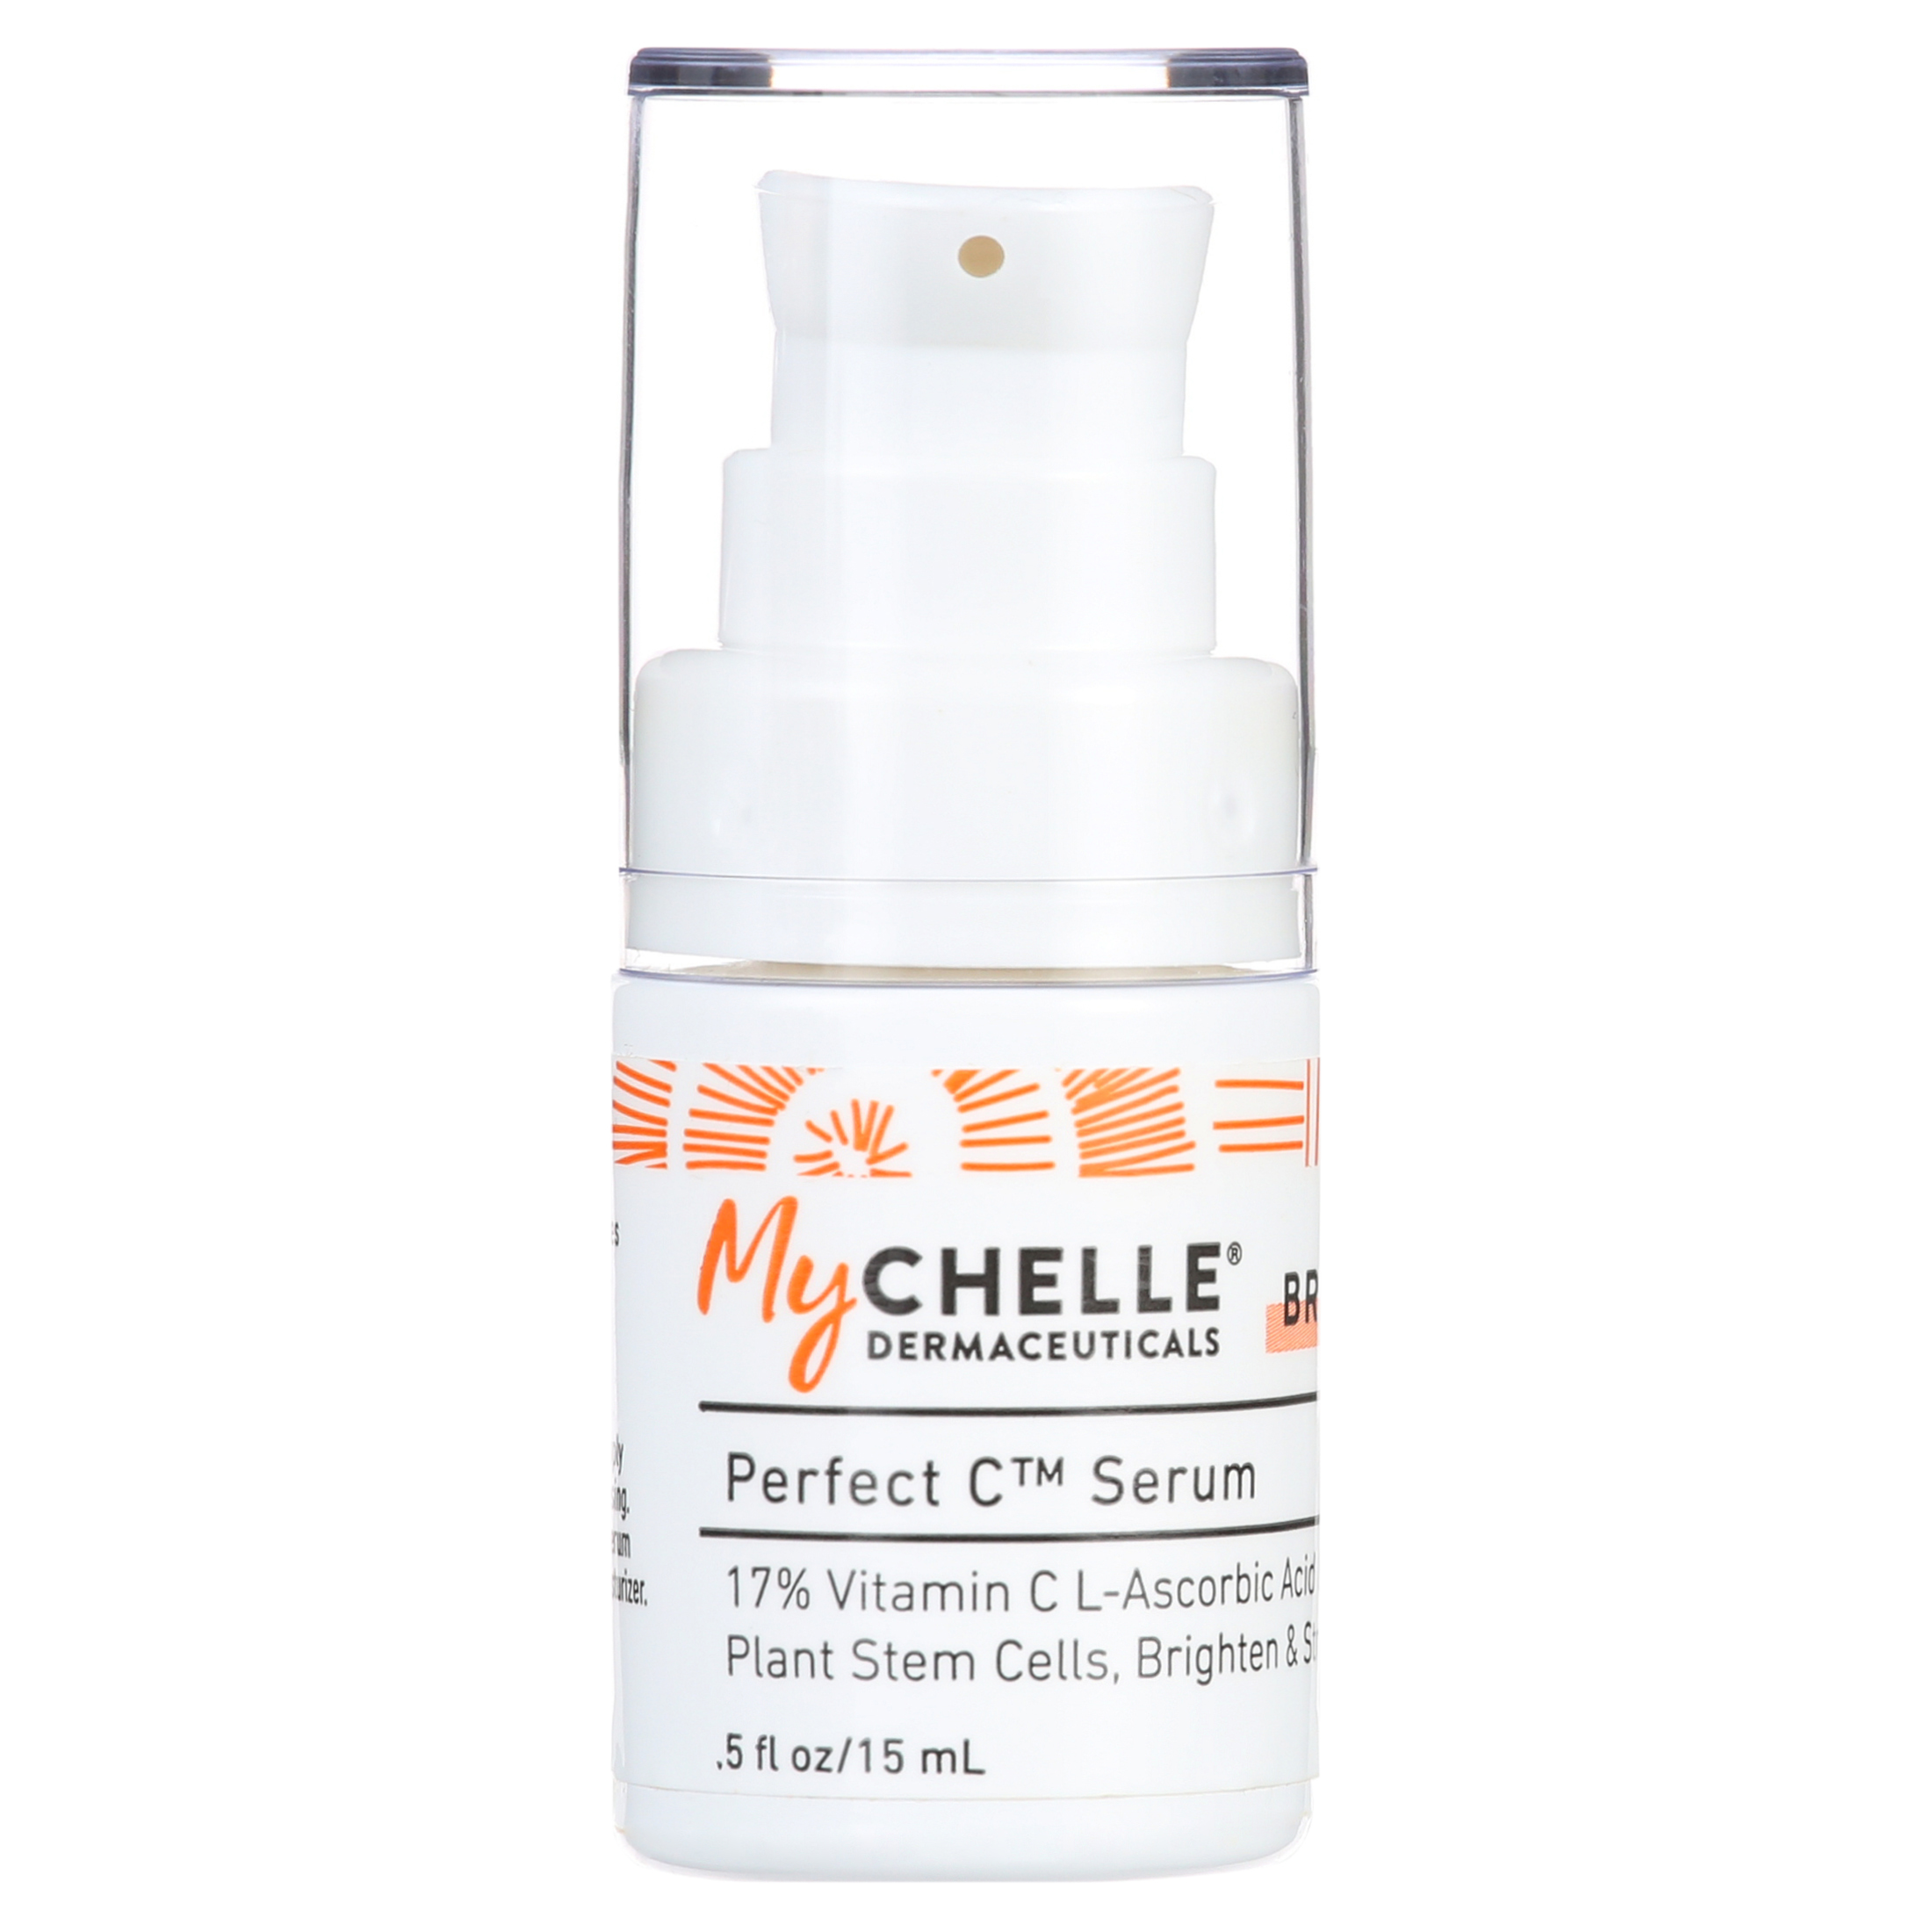 Mychelle Perfect C Serum - 17%, 0.5 Oz - image 2 of 7